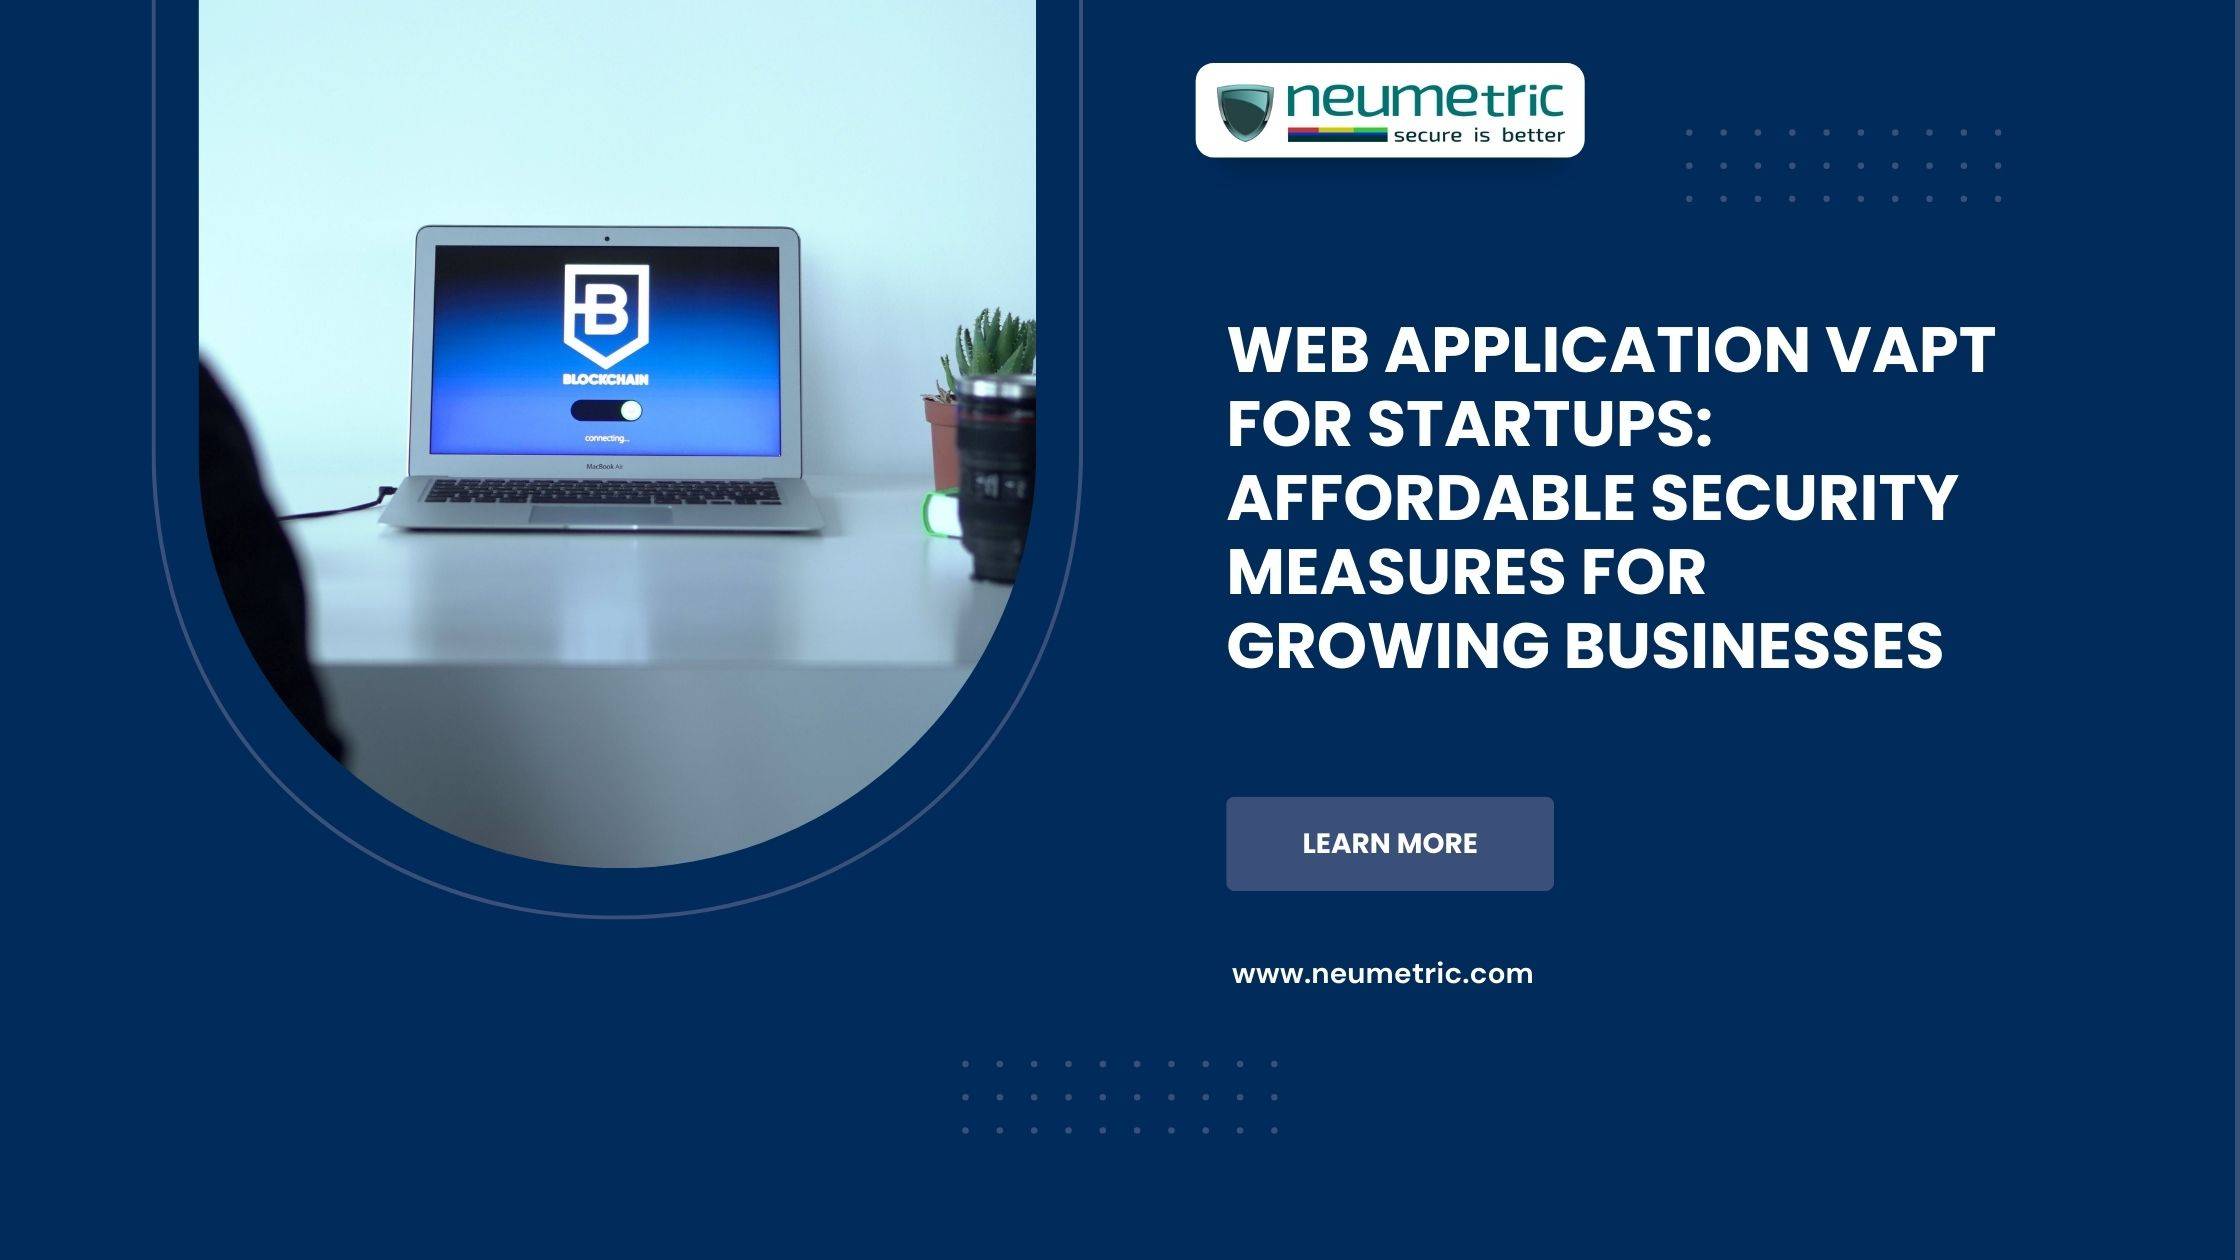 Web Application VAPT for Startups: Affordable Security Measures for Growing Businesses